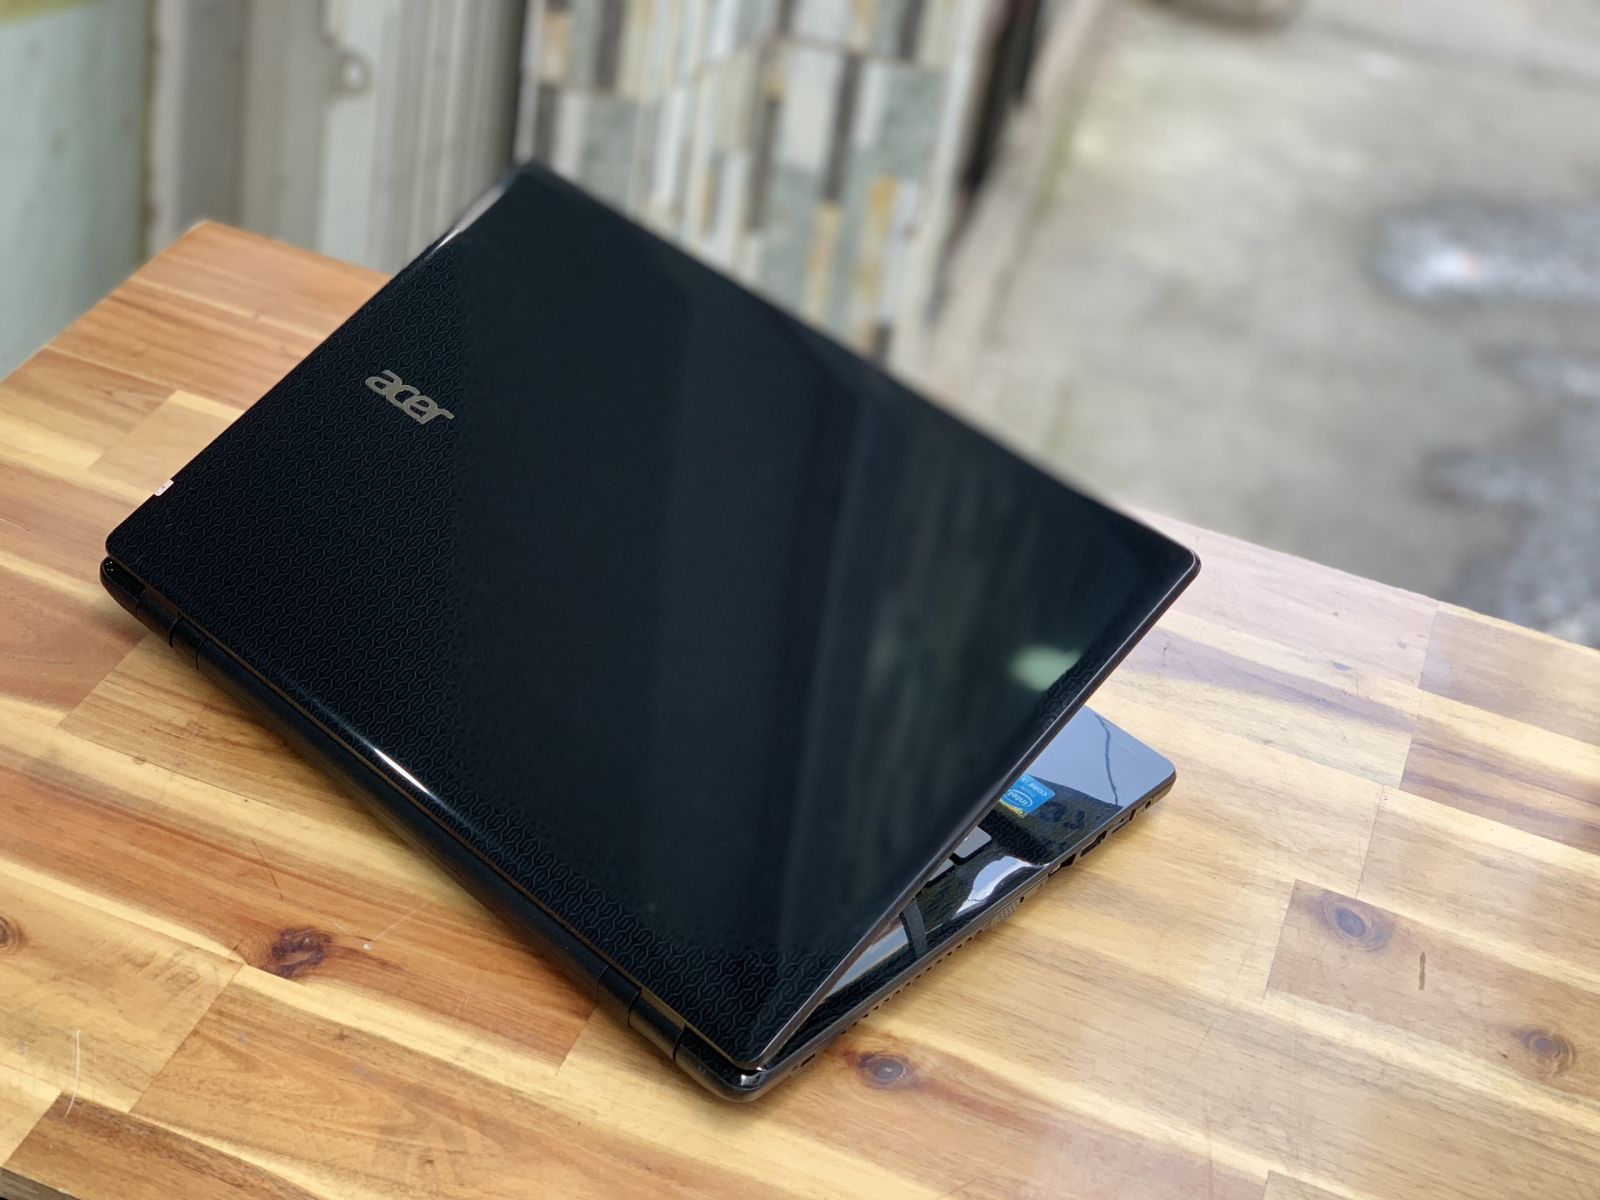 Laptop Acer E5-471/ i5 4210U/ 4G/ 500G/ 14in/ Đẹp Keng/ Zin 100%/ Giá rẻ3